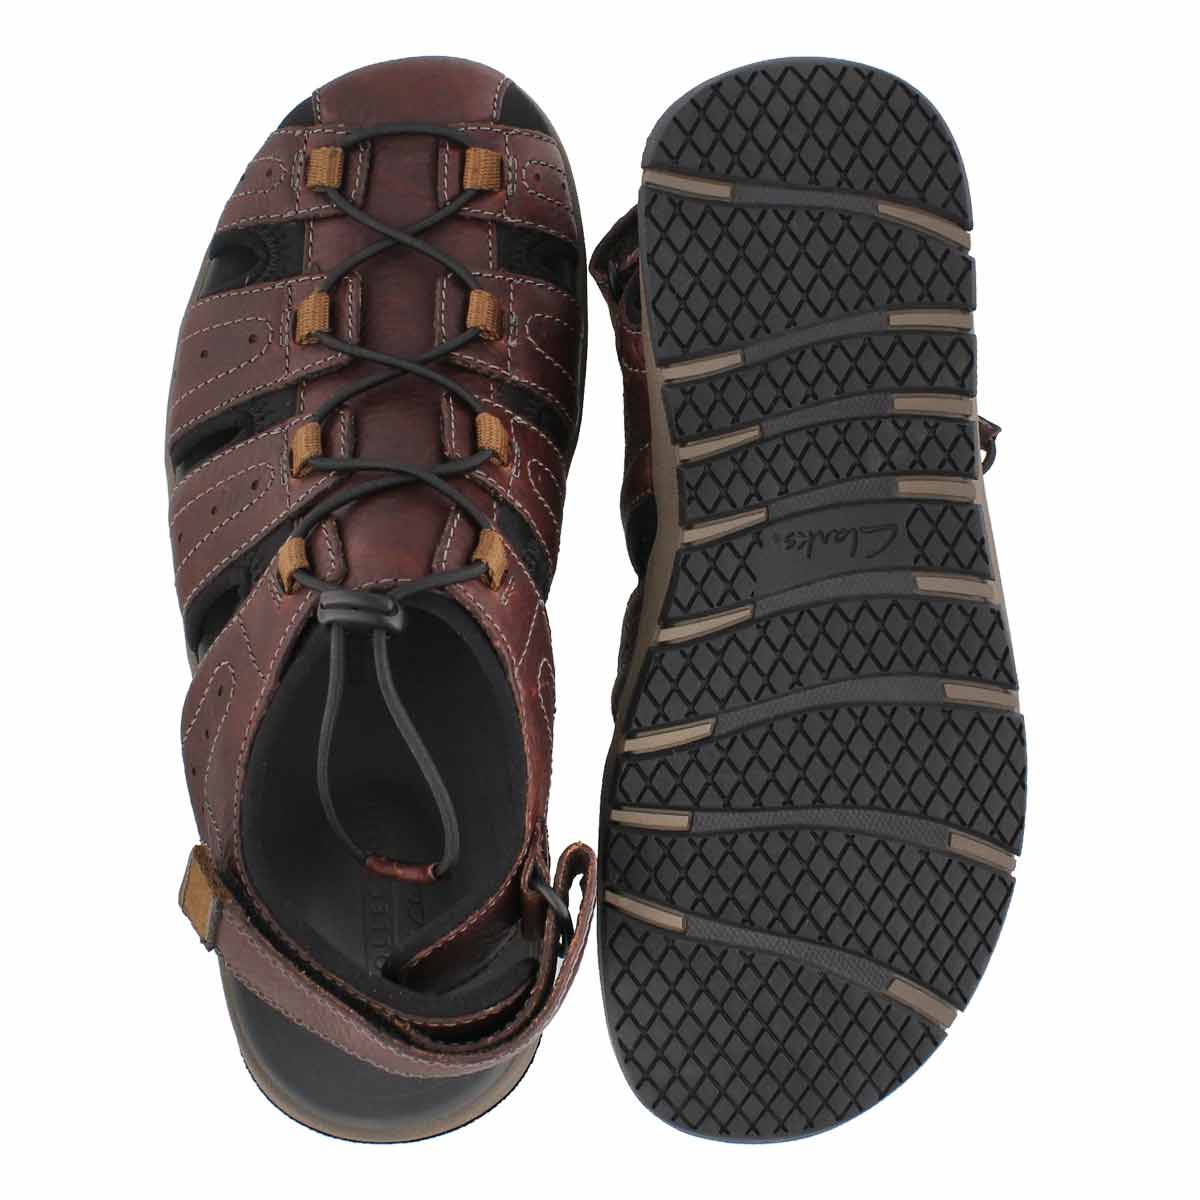 clarks men's brixby cove sandals